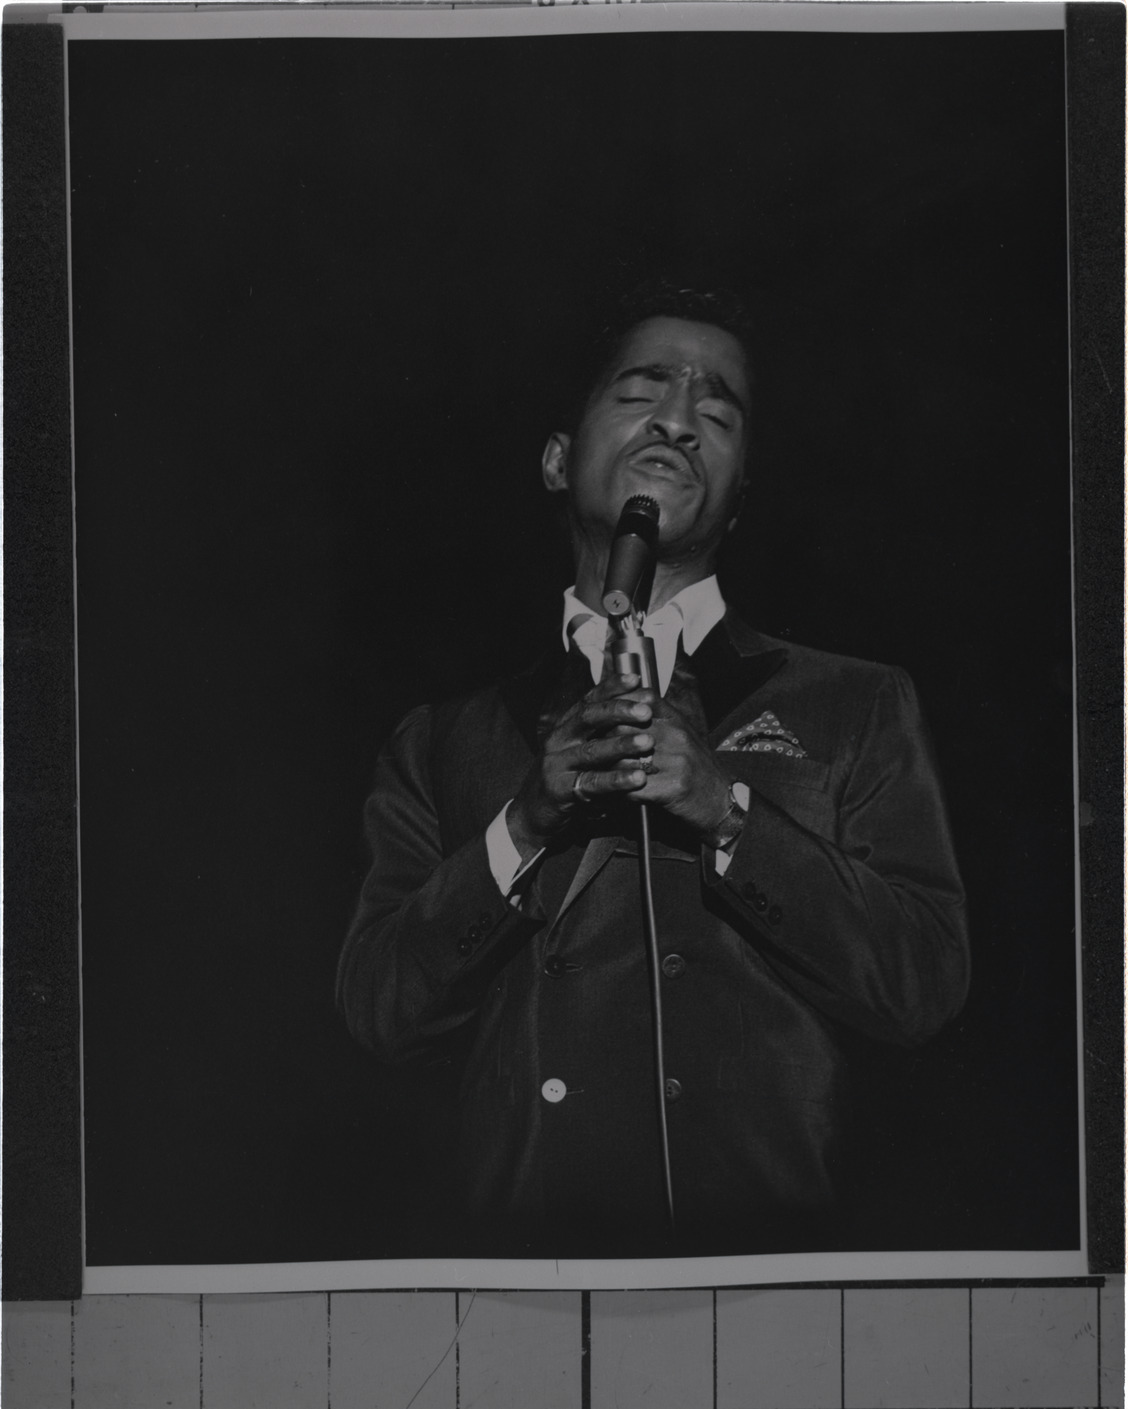 Sammy Davis, Jr. performing, Image 01